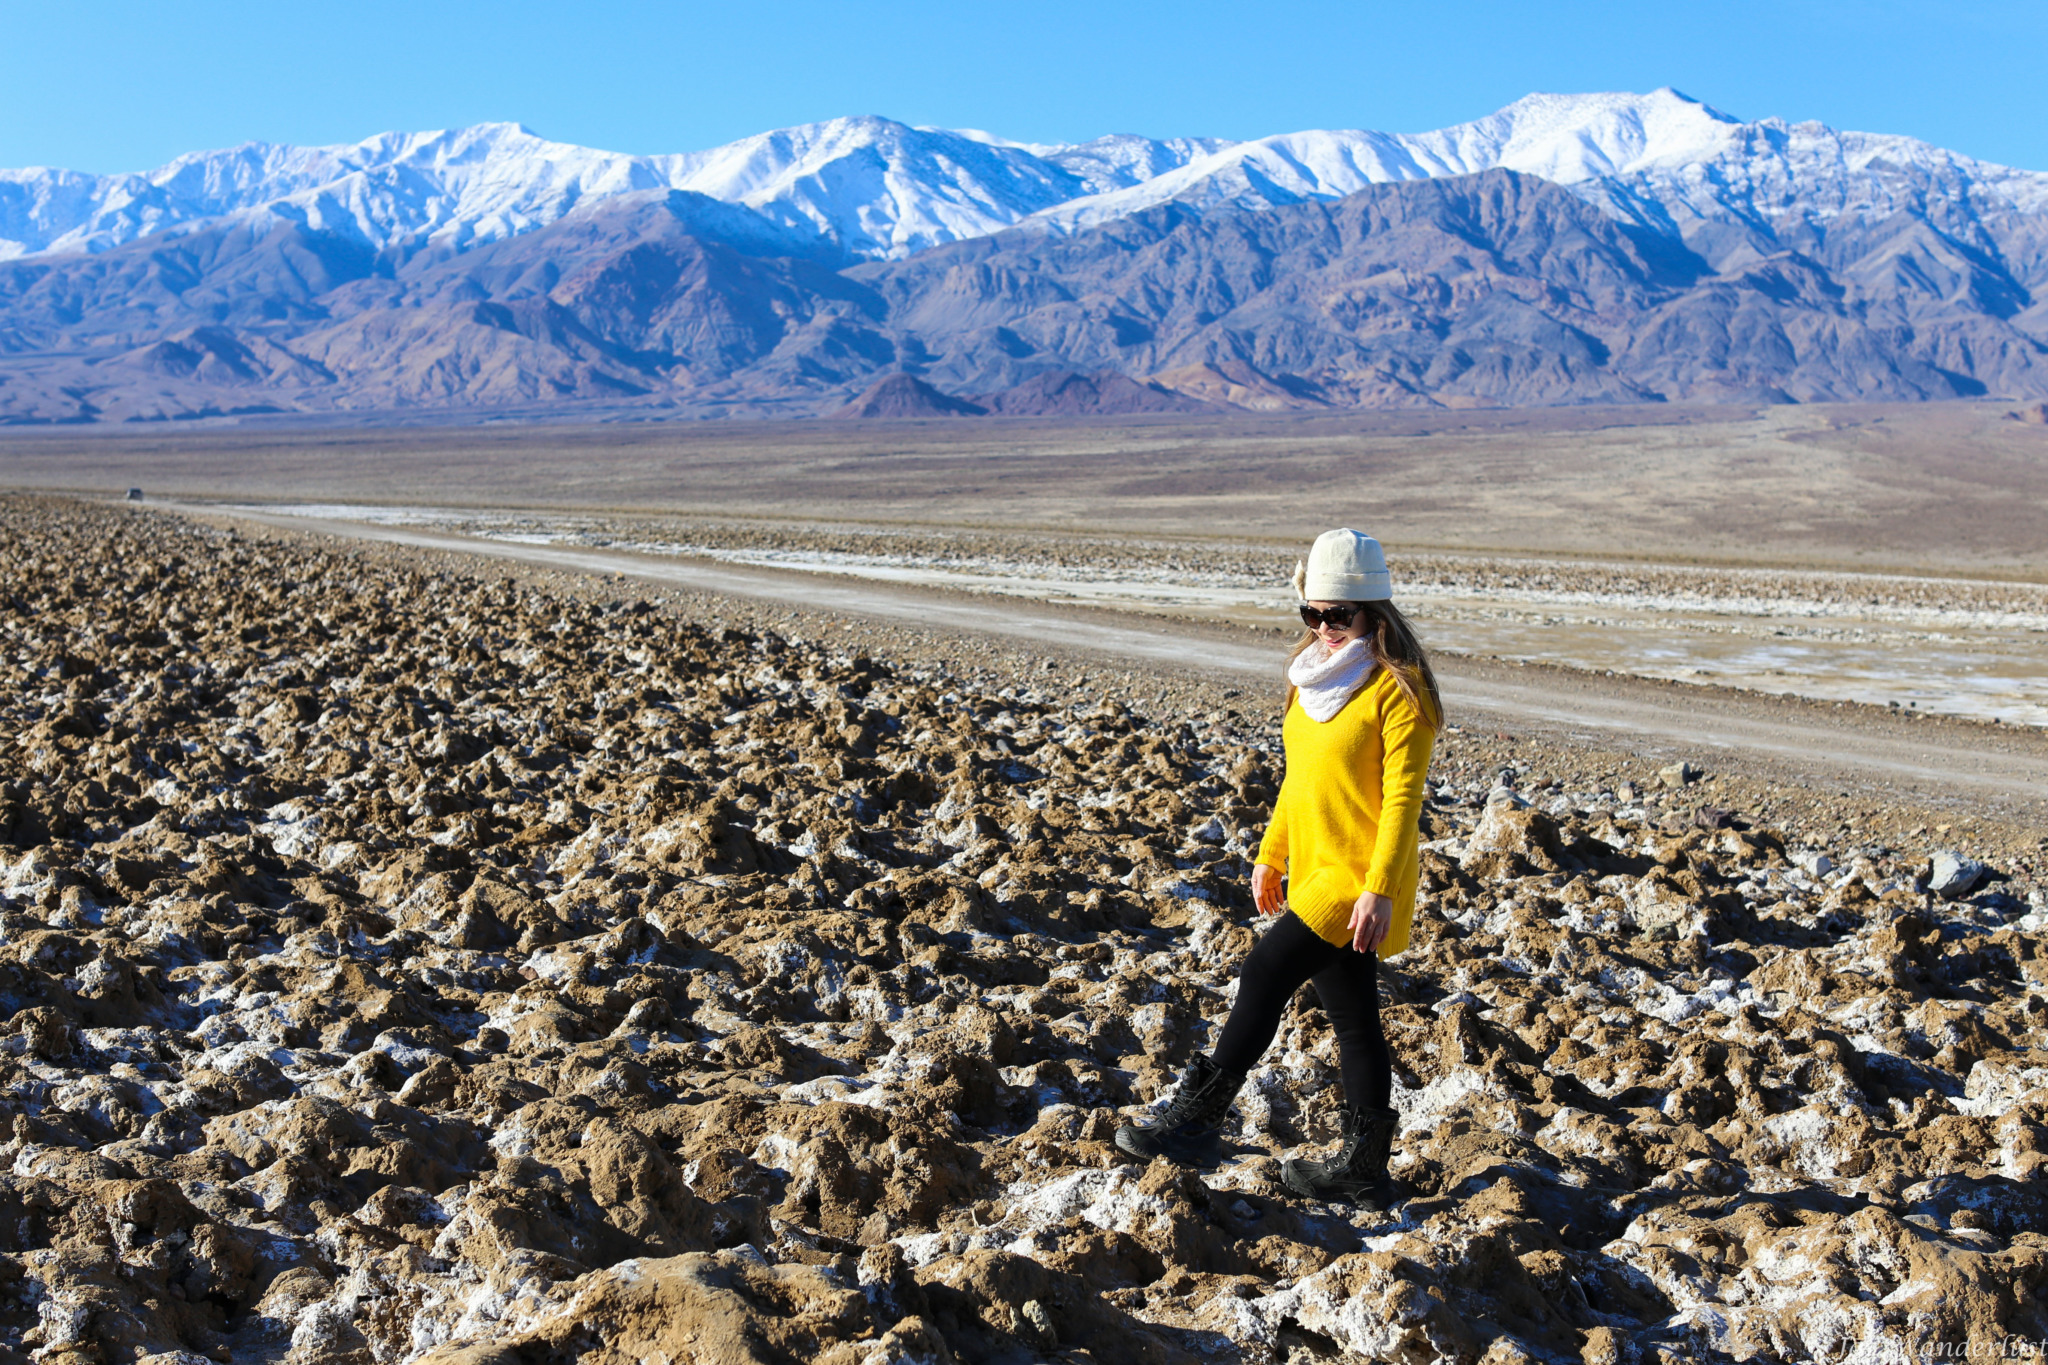 Crystalline salt spires at Death Valley National Park. Photography by Jaz Wanderlust.